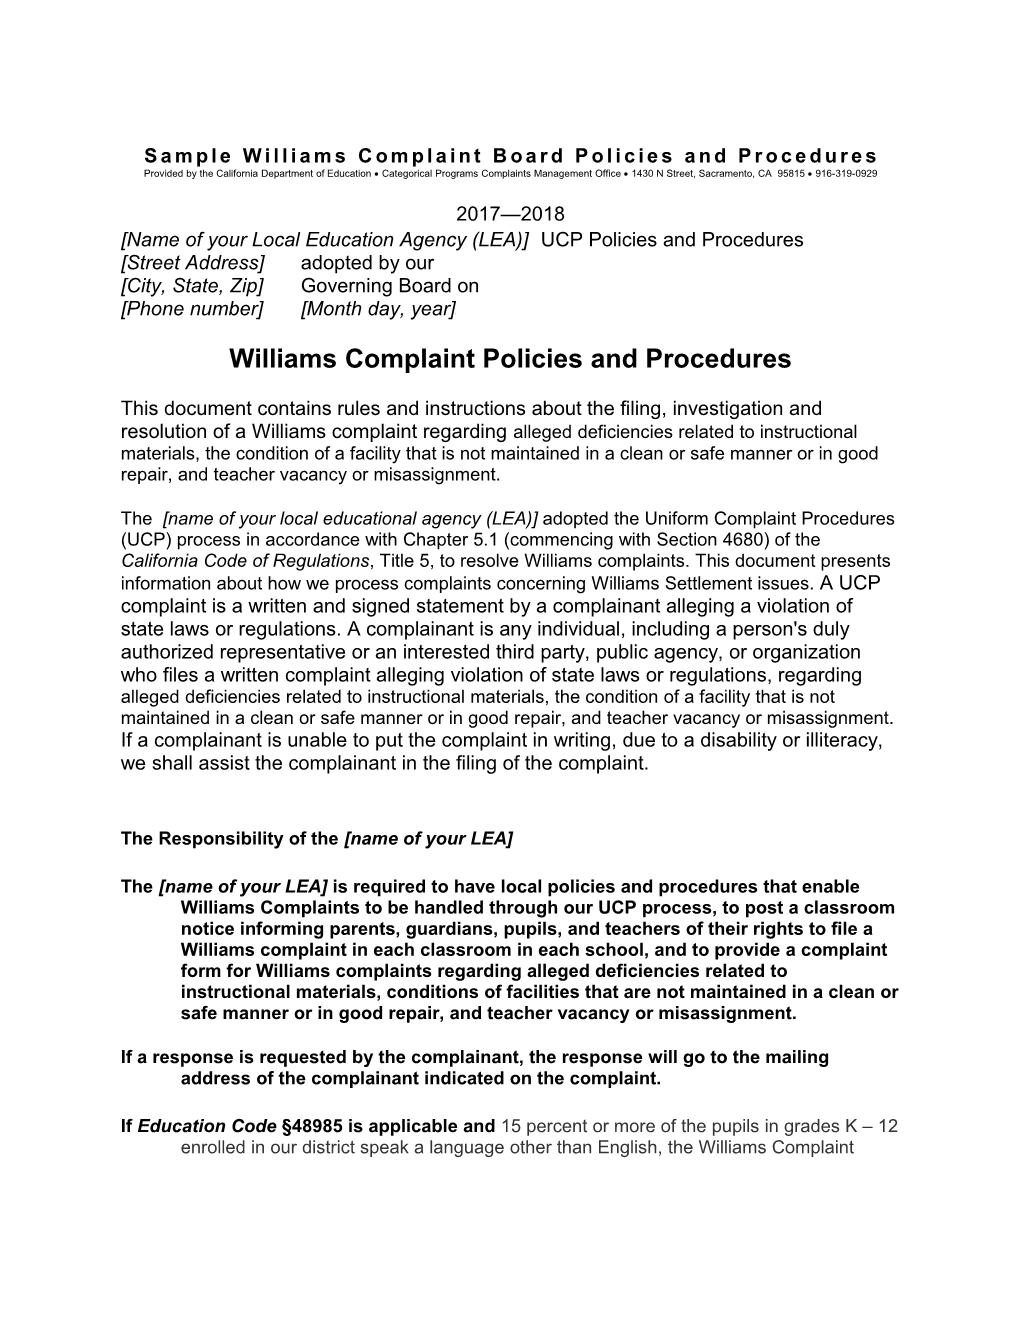 Sample Wlms Cmplnt Pol and Pro - Uniform Complaint Procedures (CA Dept of Education)